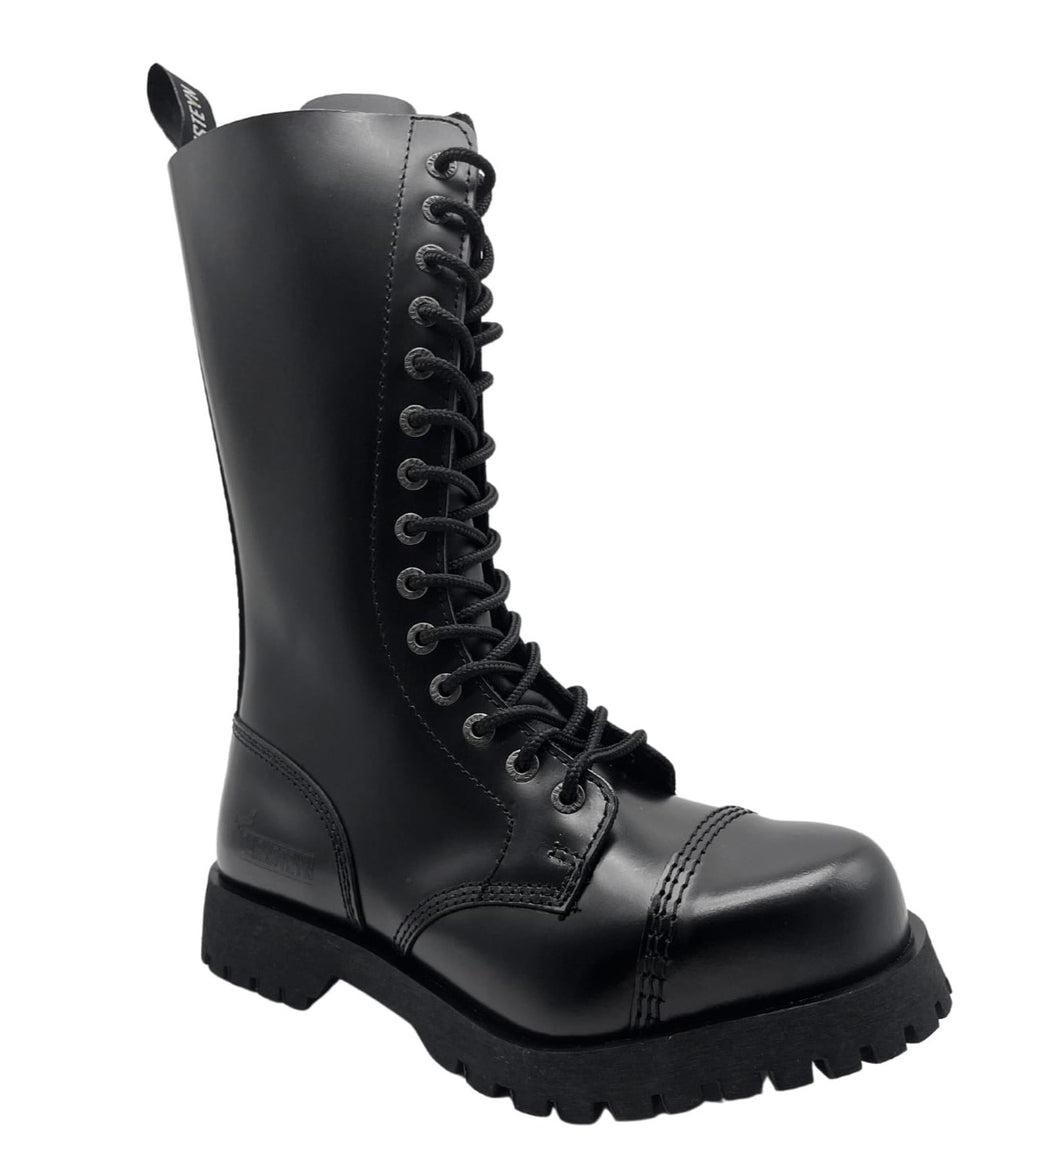 Darksteyn Schuhe 14 Eye Ranger Premium Boots Black